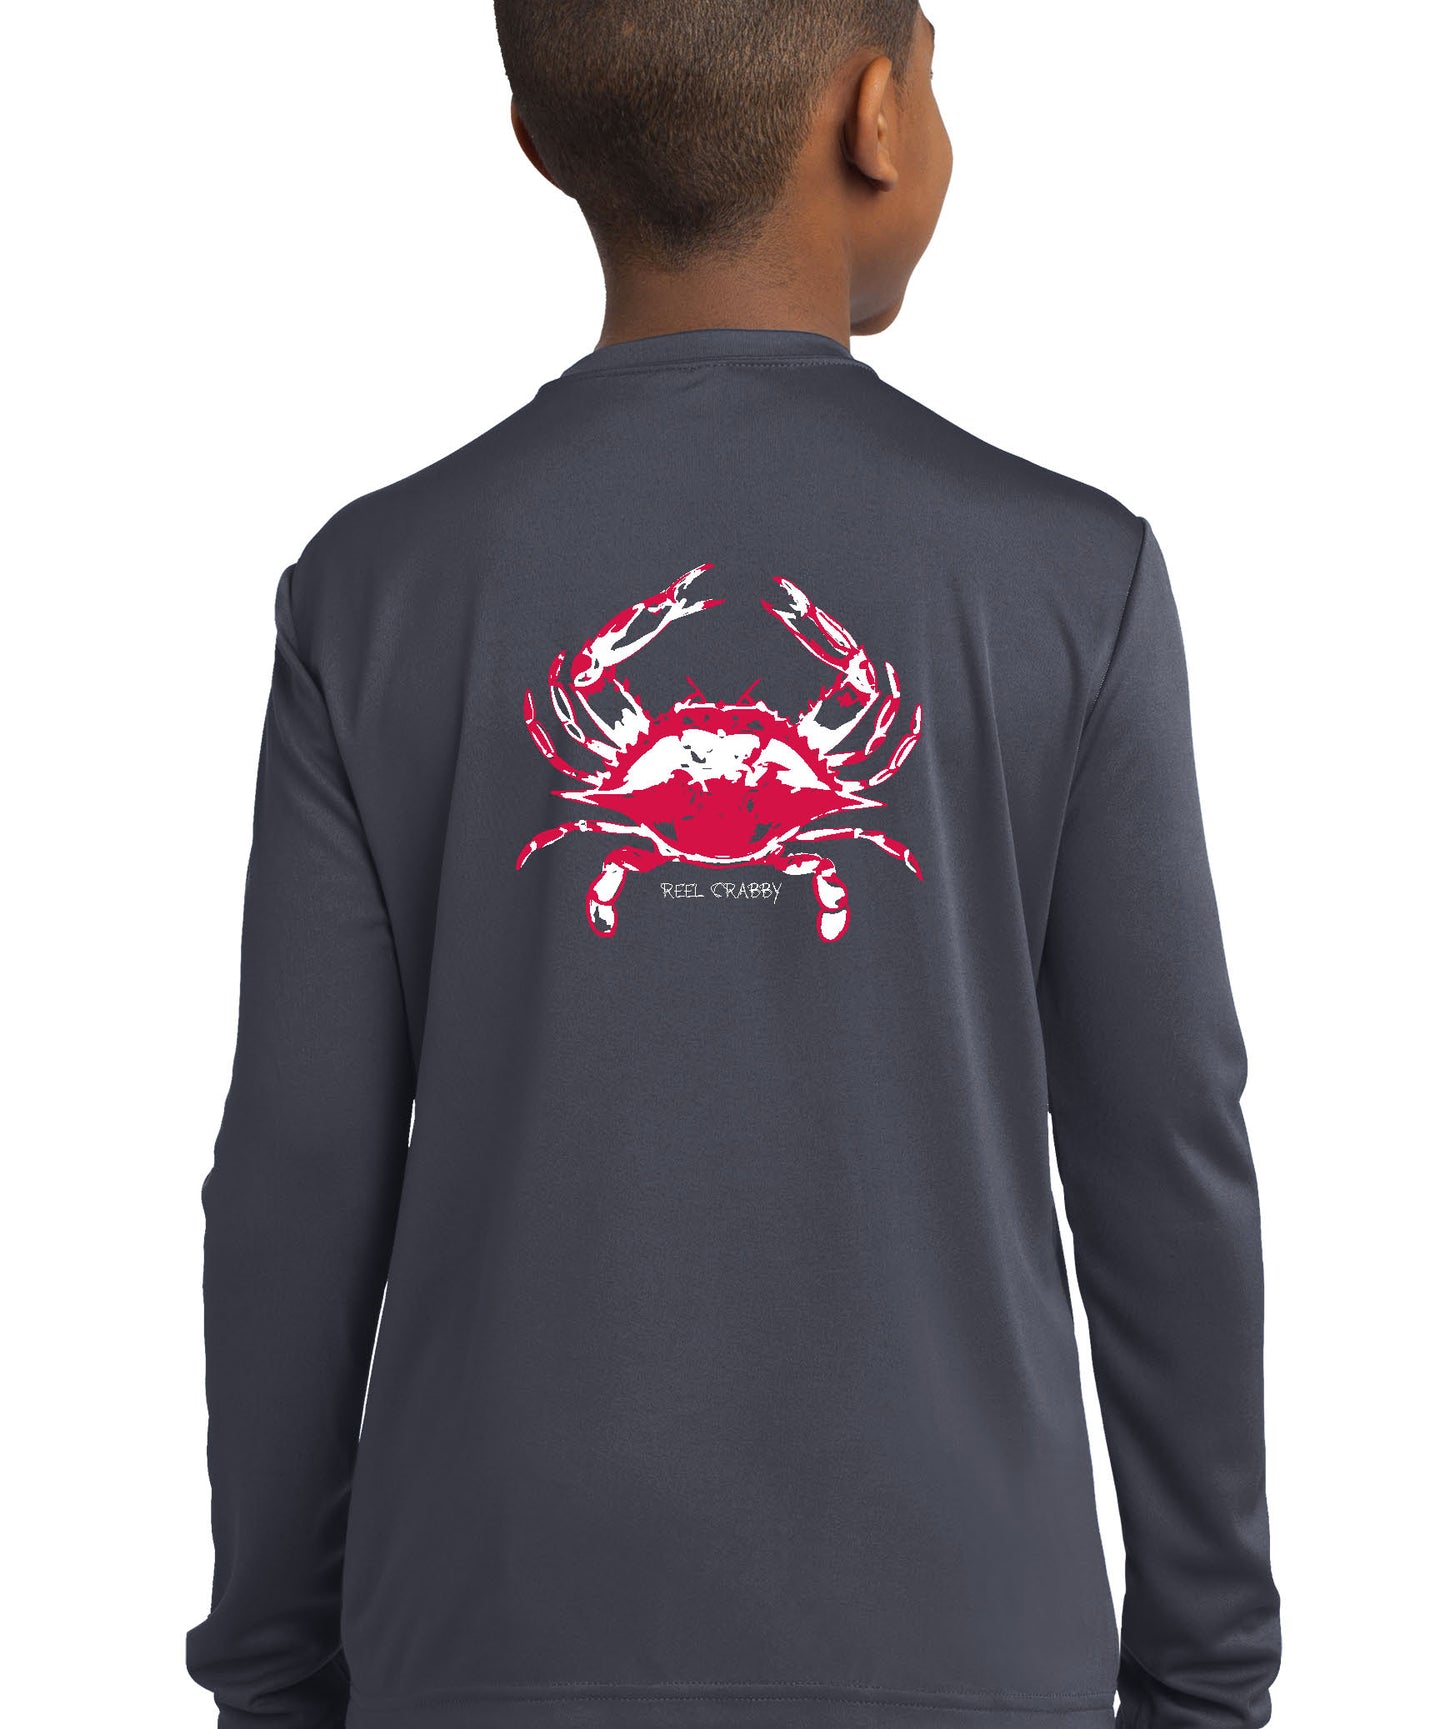 Youth Performance Fishing Shirts 50+uv Sun Protection -Reel Fishy Apparel L / Navy Crab L/S - Yellow Logo